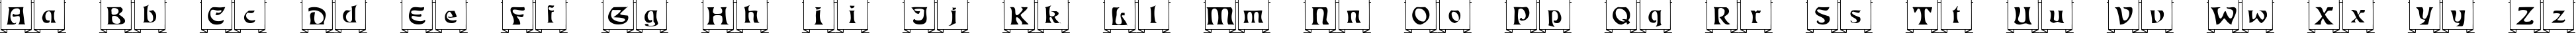 Пример написания английского алфавита шрифтом Fanfold